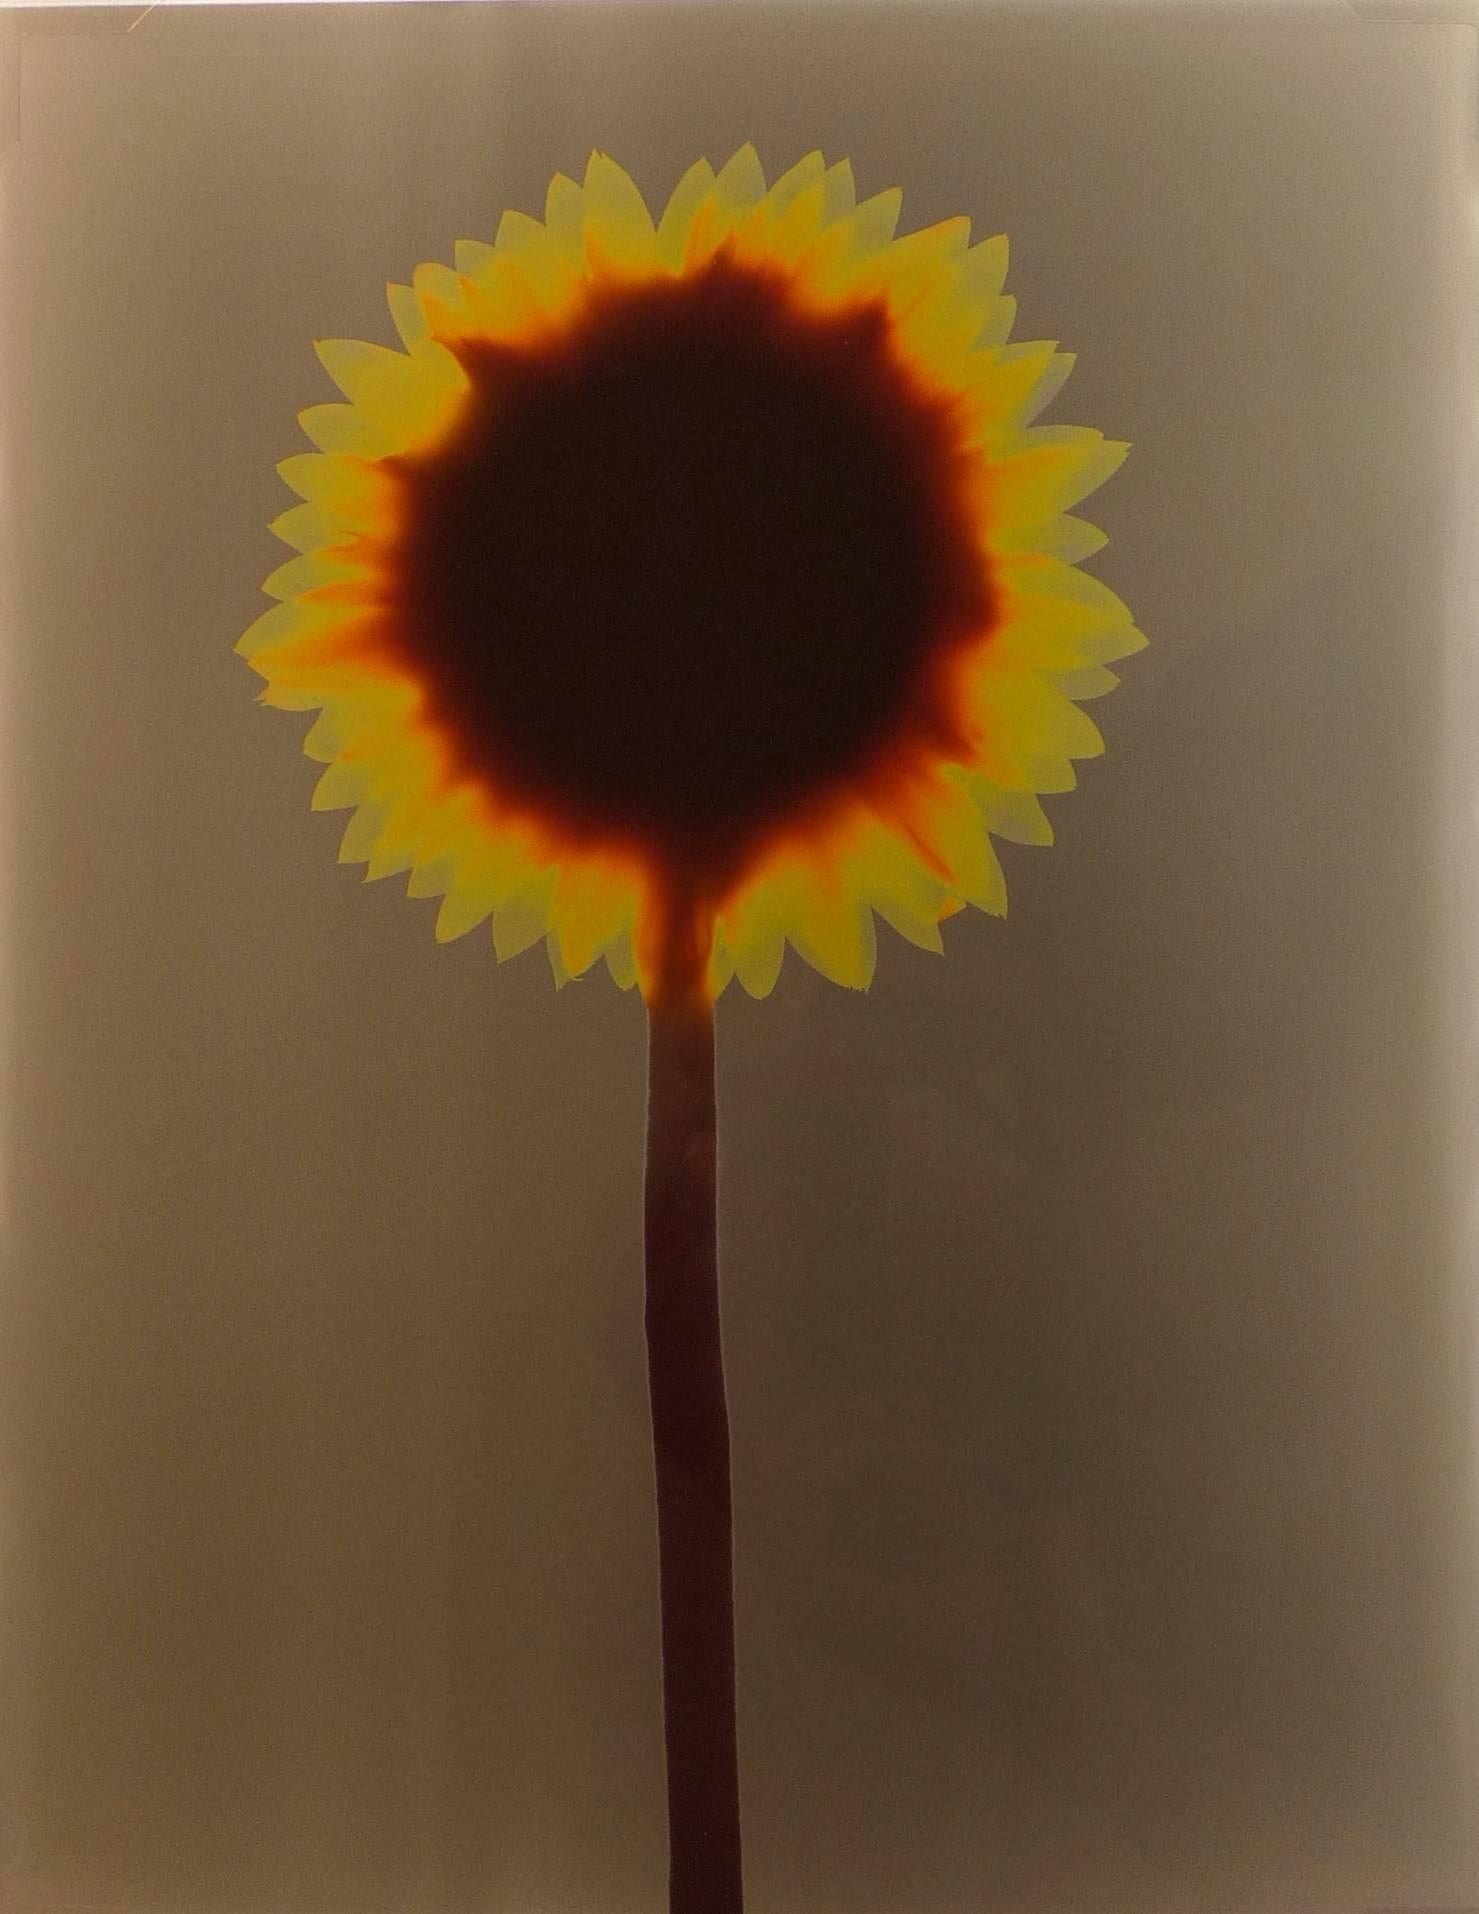 Adam Fuss Color Photograph - Untitled (Sunflower)